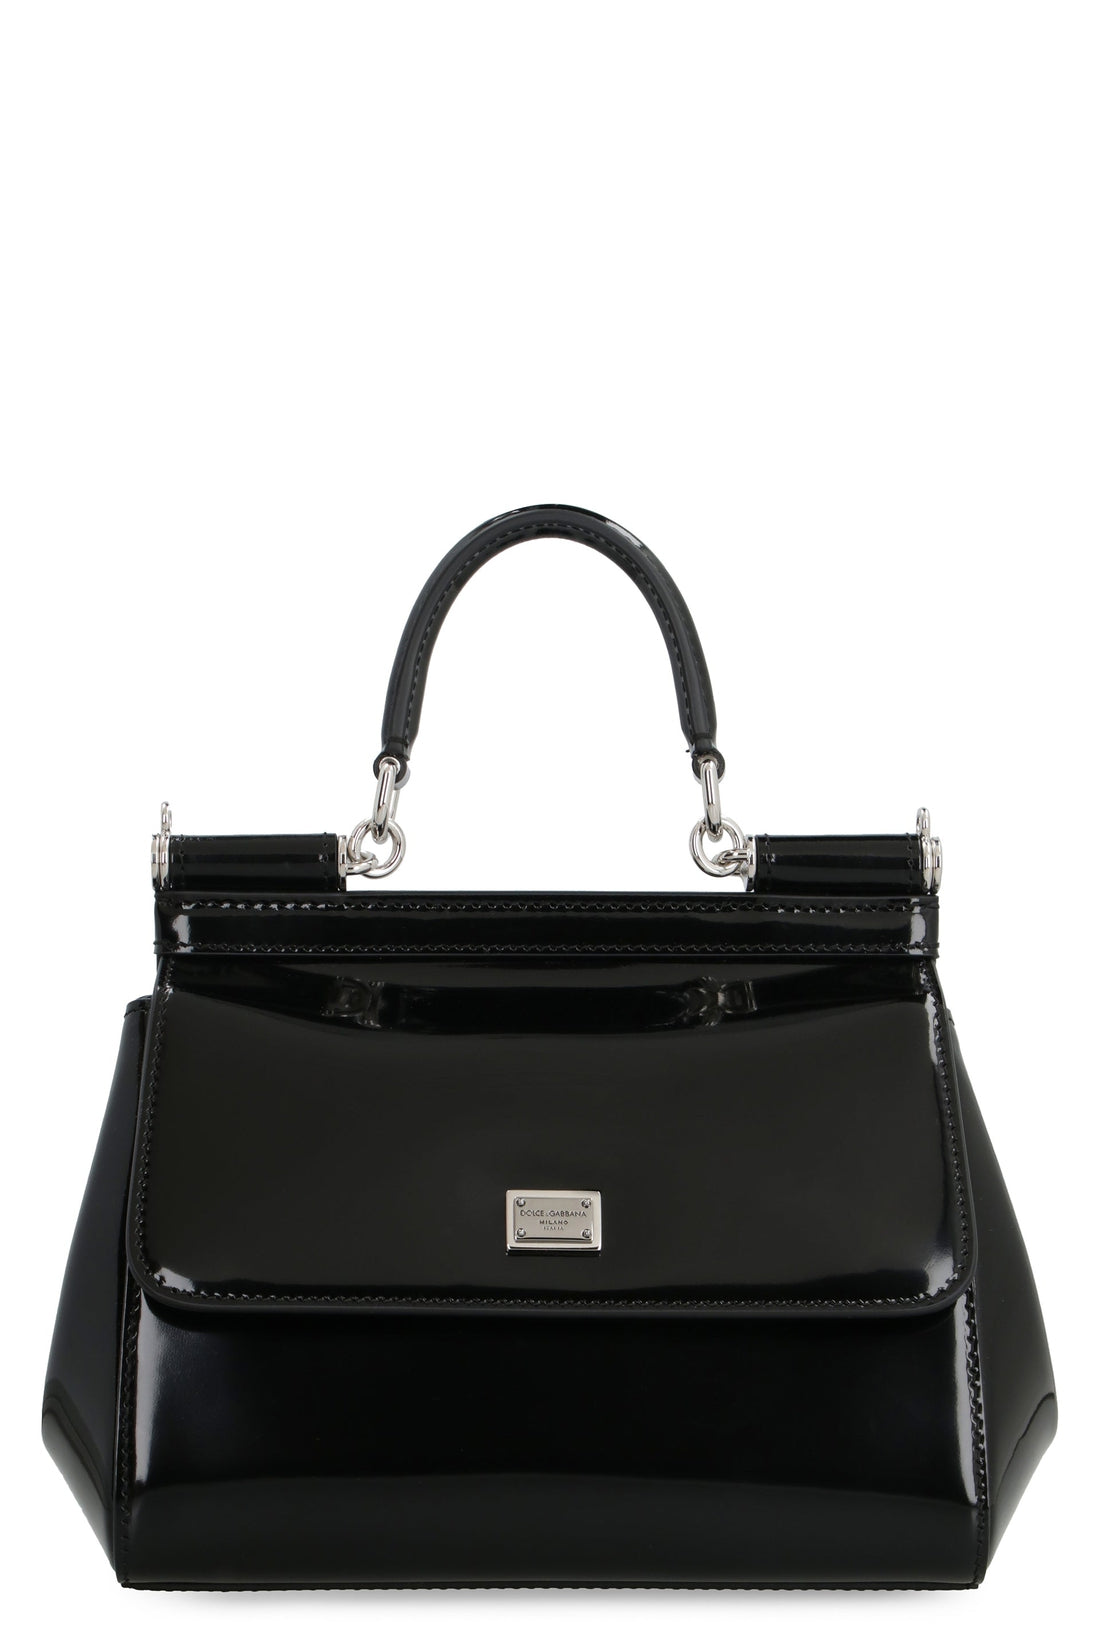 Dolce & Gabbana-OUTLET-SALE-KIM DOLCE&GABBANA - Sicily leather mini handbag-ARCHIVIST